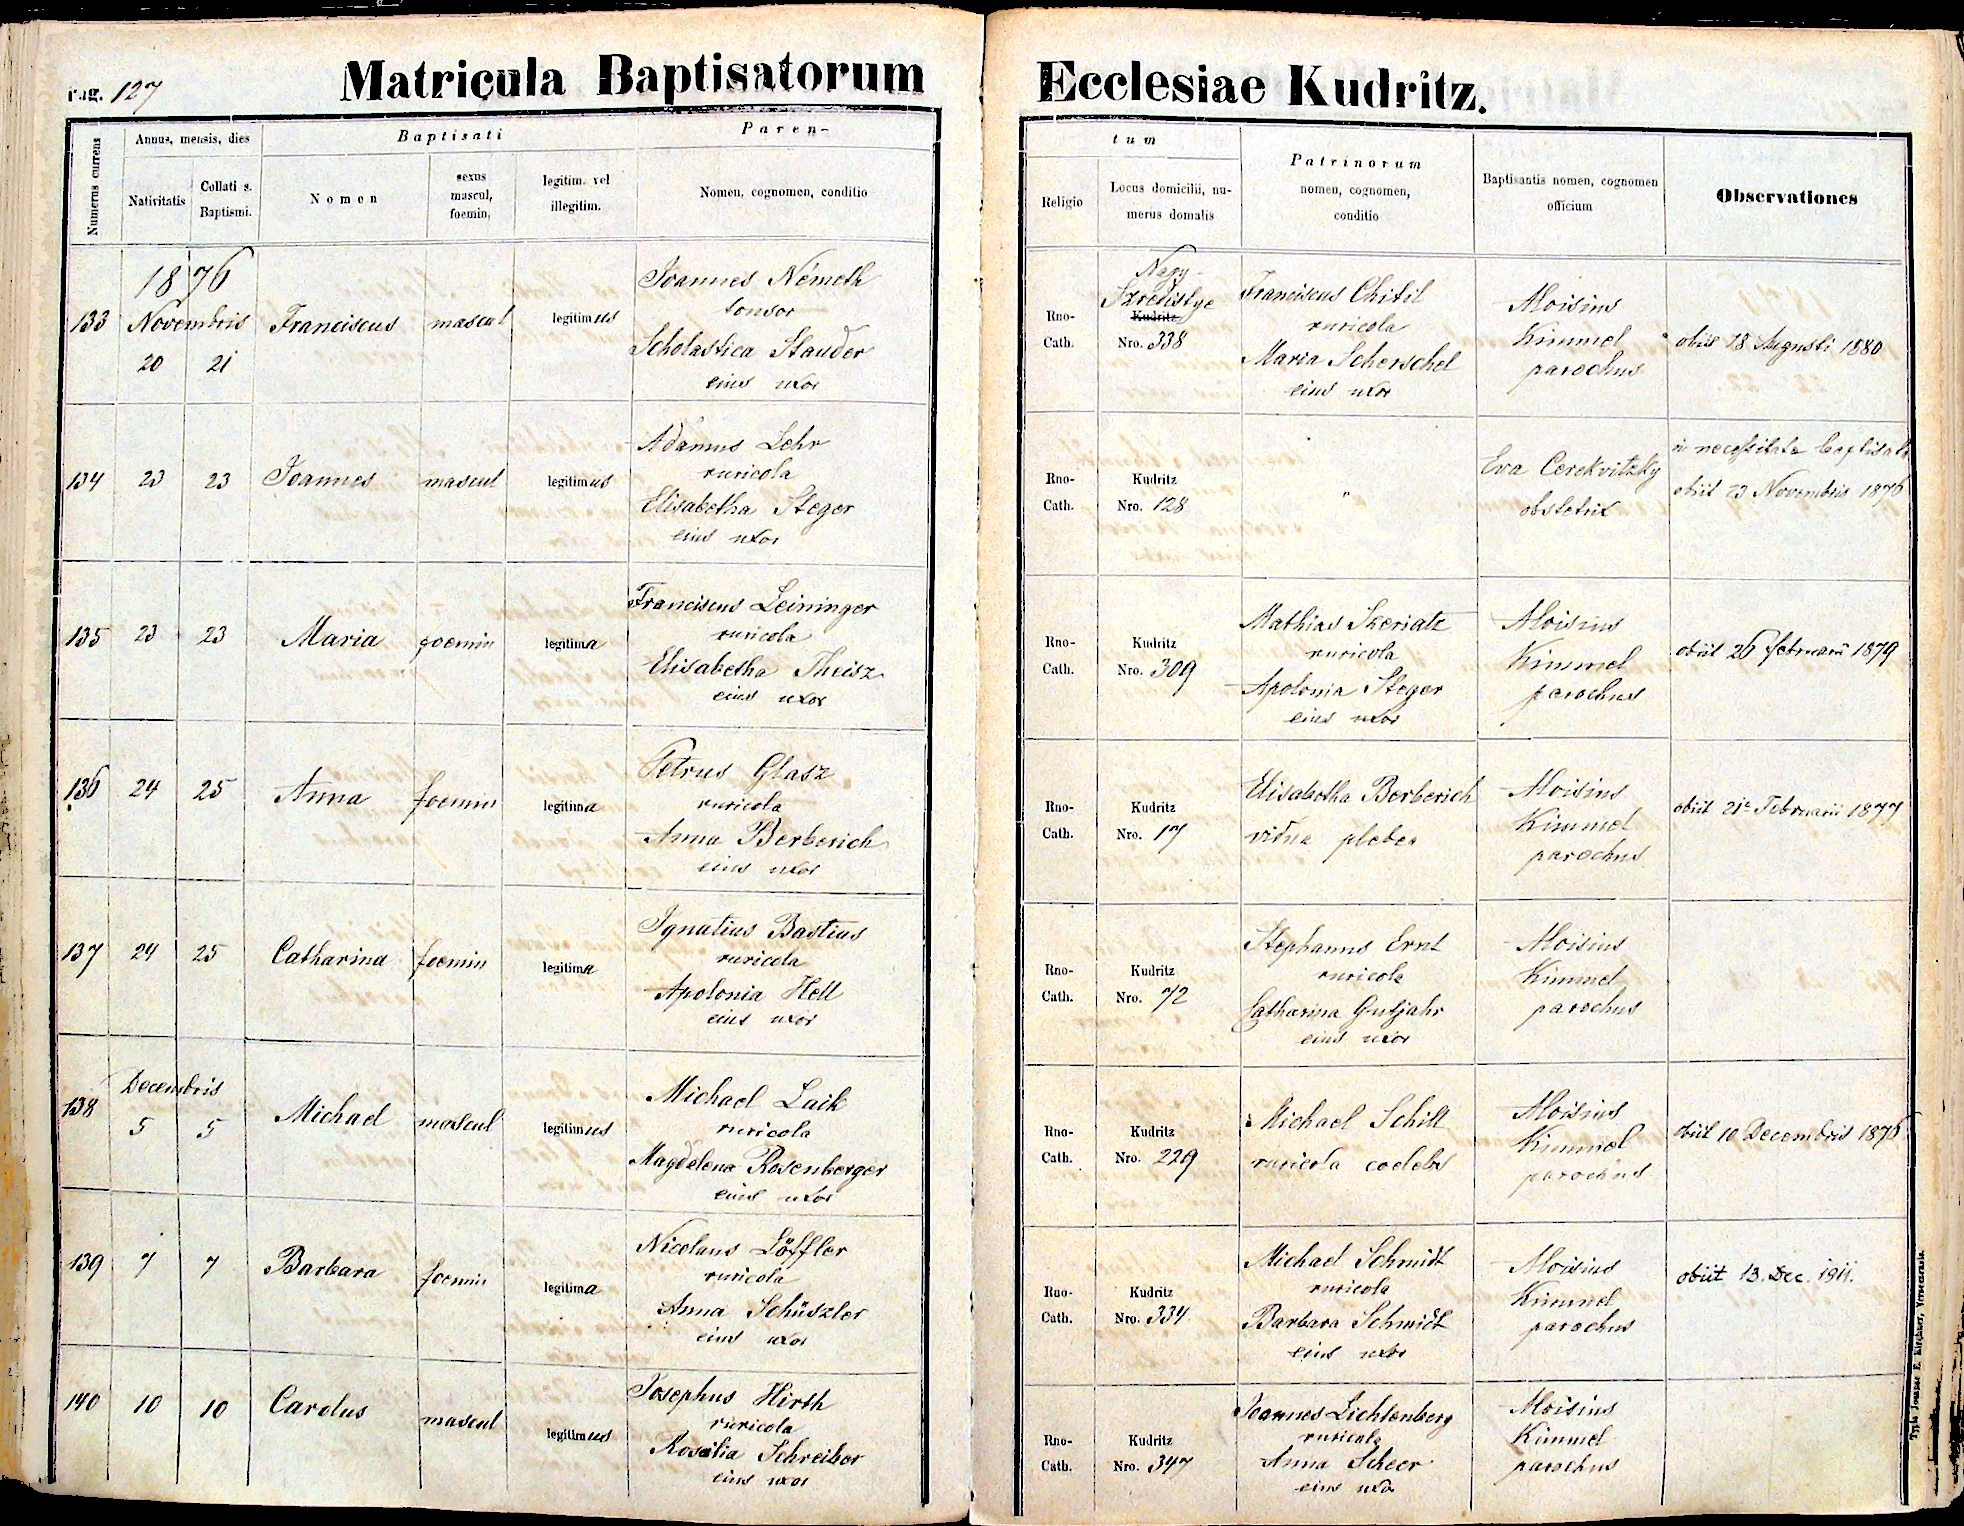 images/church_records/BIRTHS/1884-1899B/1892/127